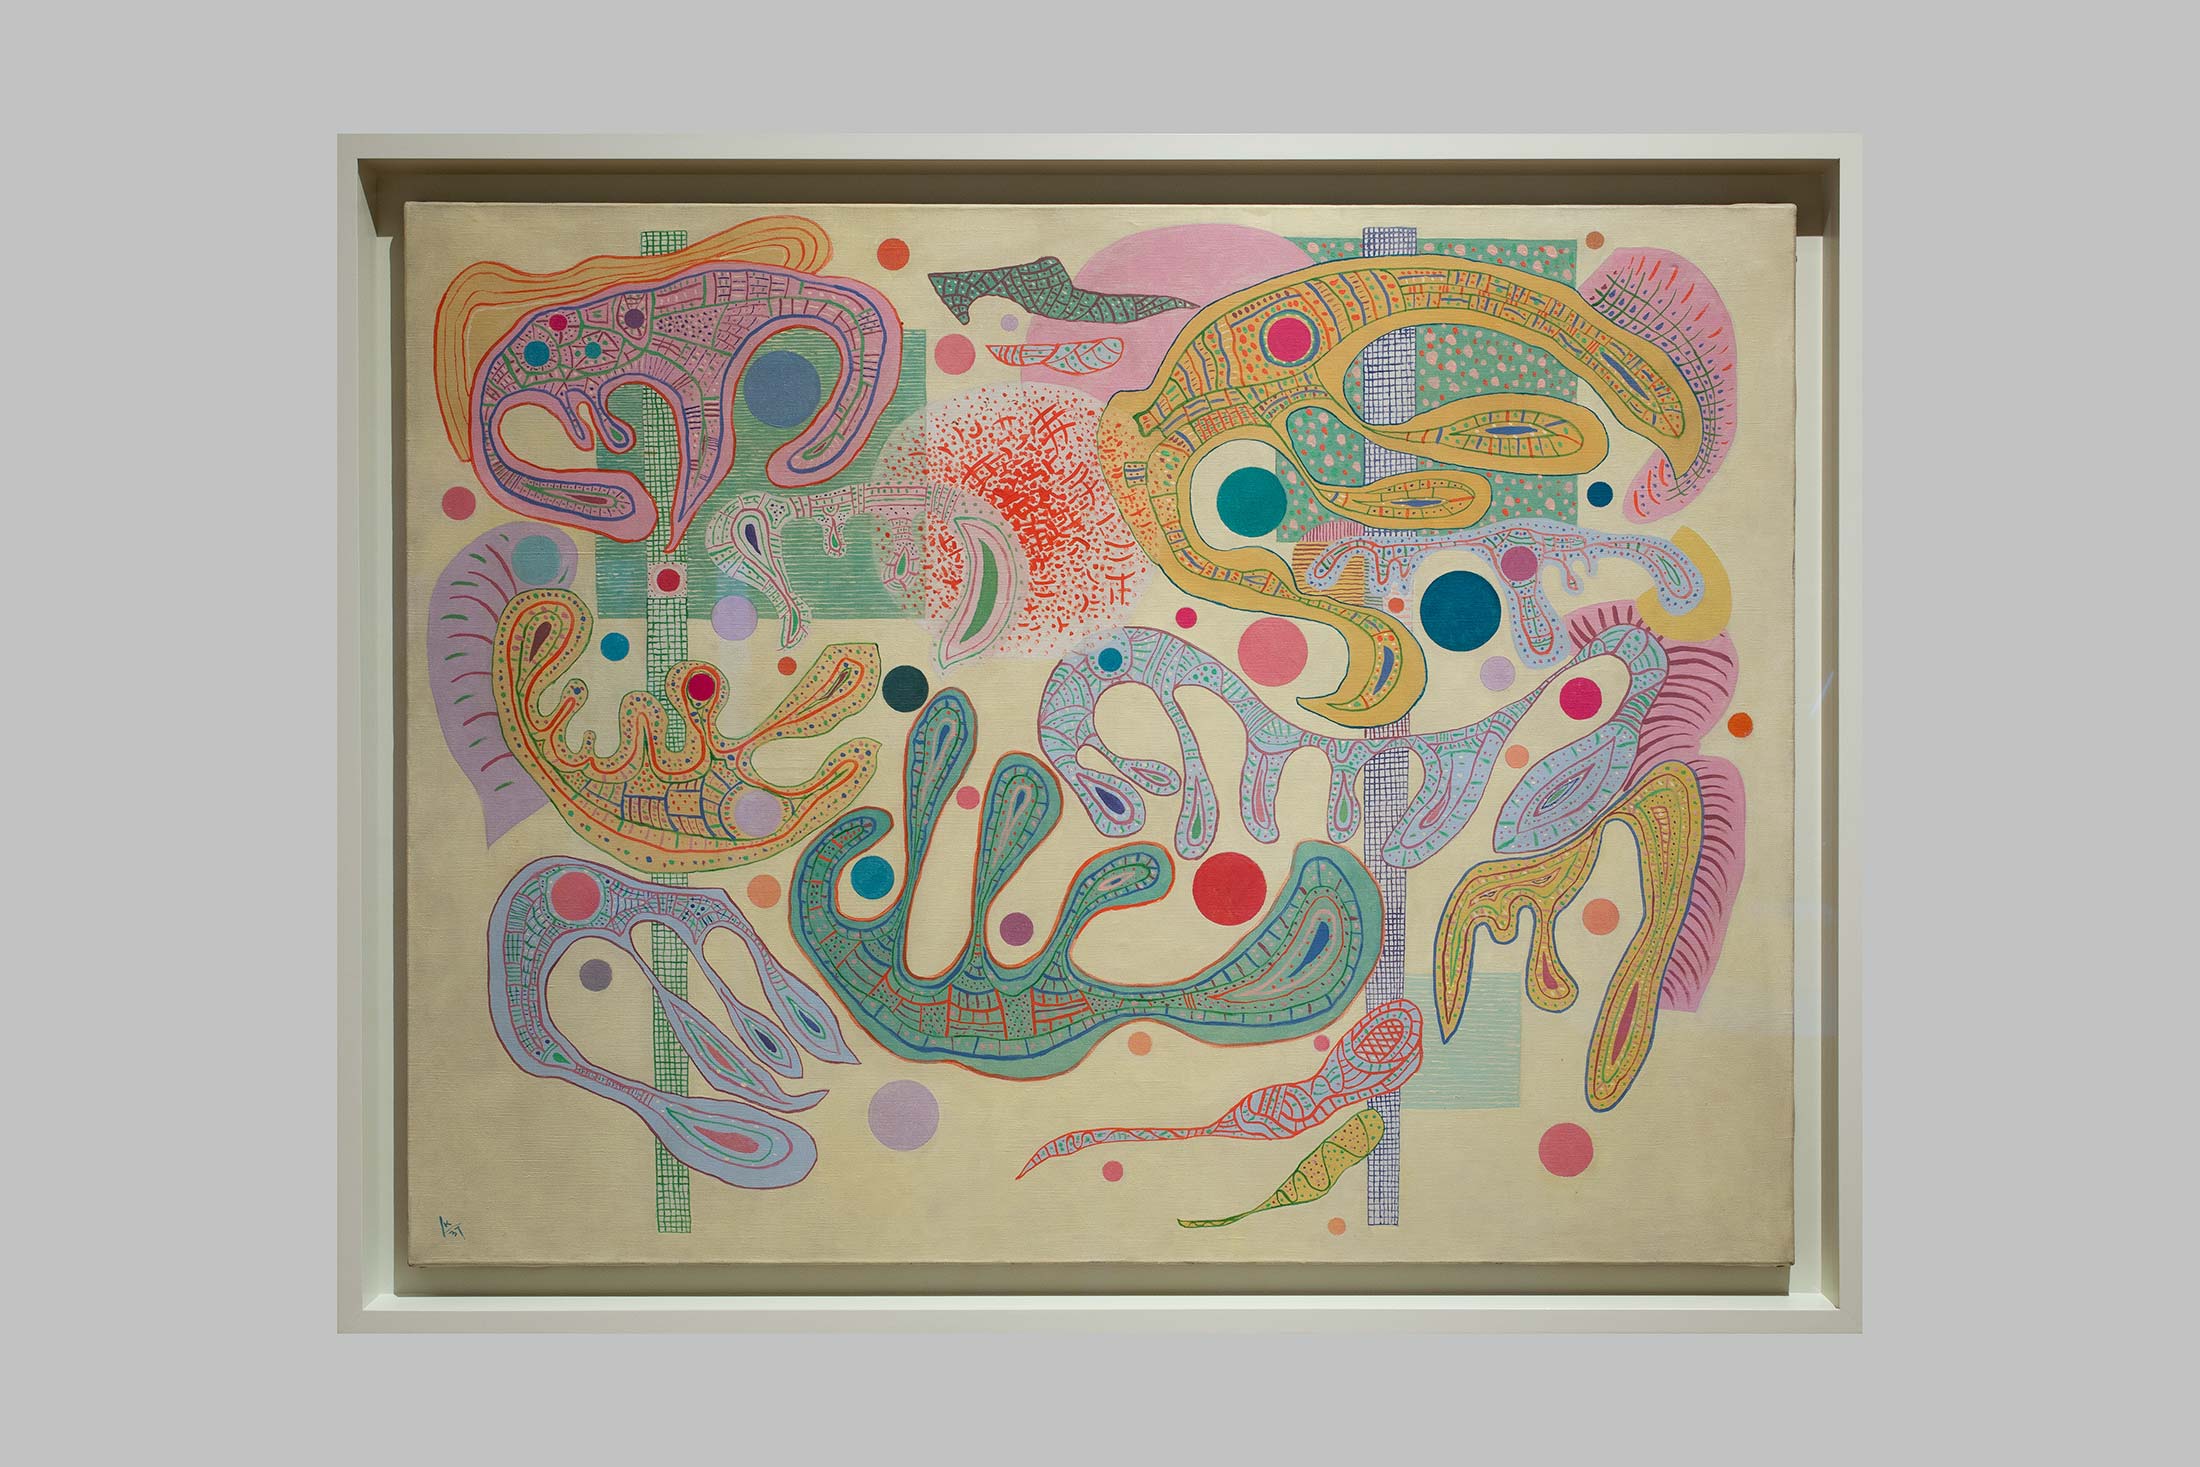 Capricious Forms (1937). Wassily Kandinsky